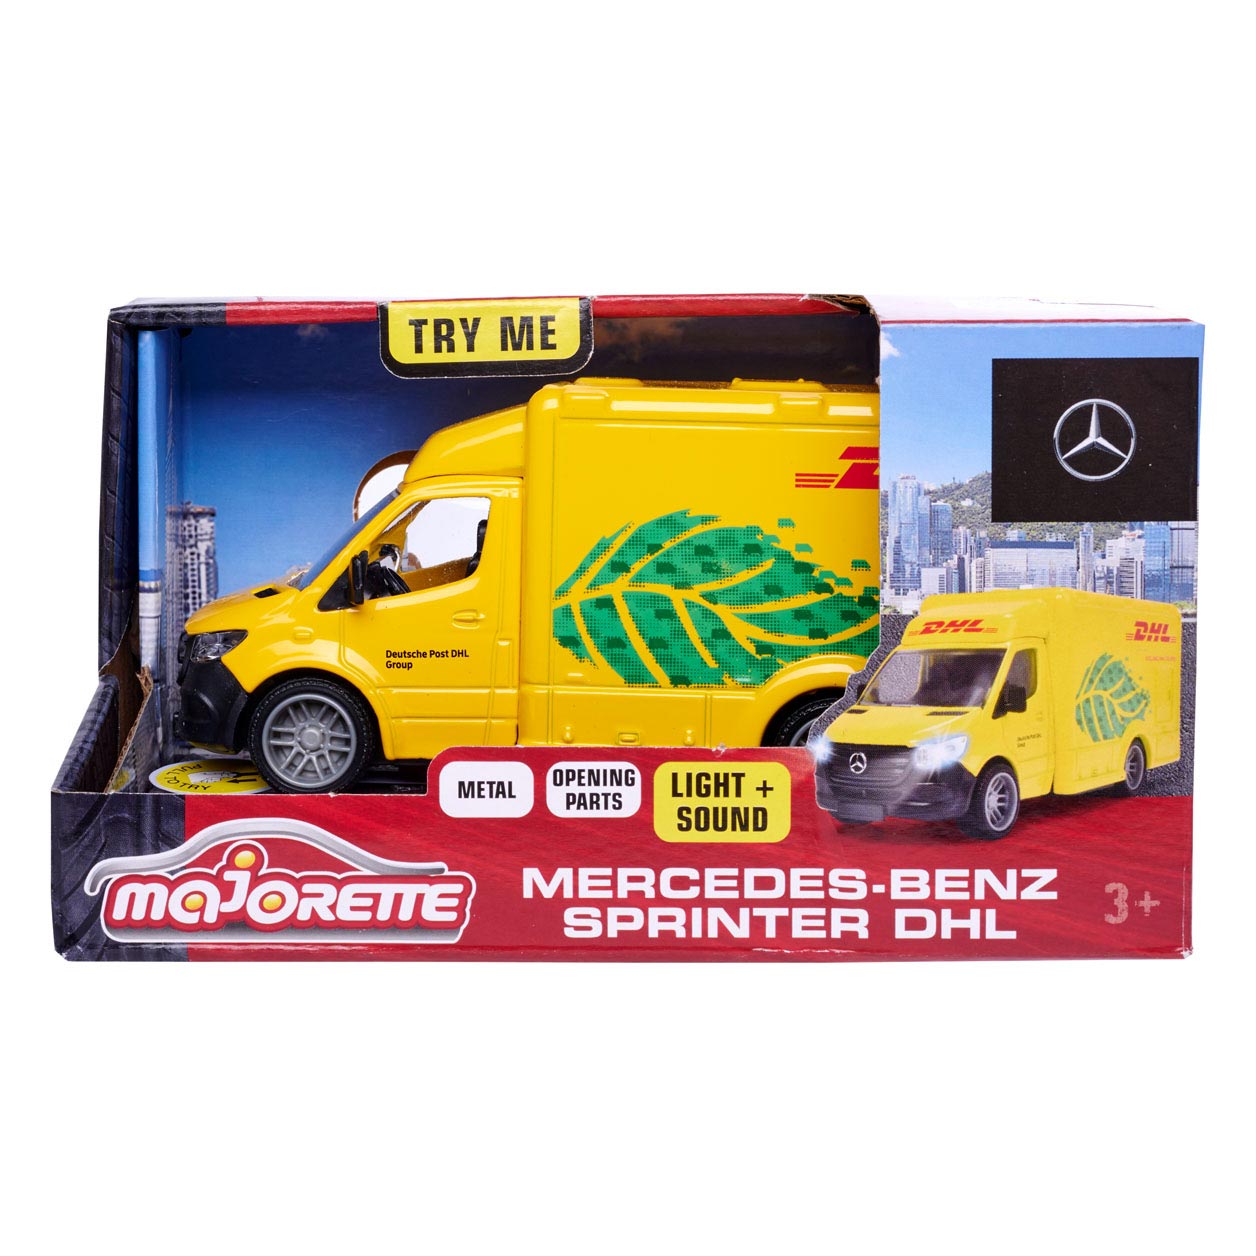 Mercedes-Benz Sprinter DHL